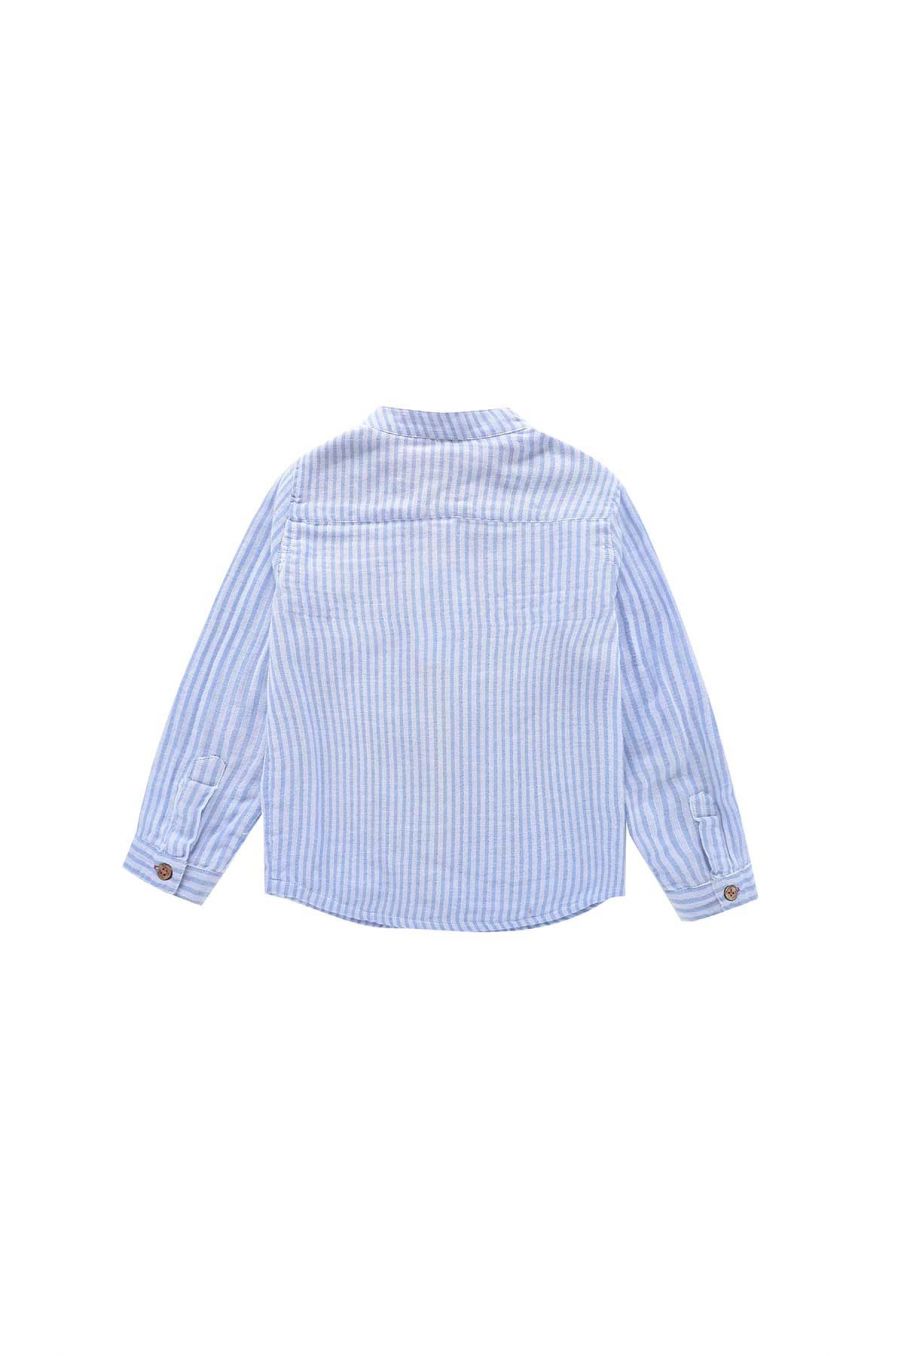 garccon-chemise-amod-blue-stripes